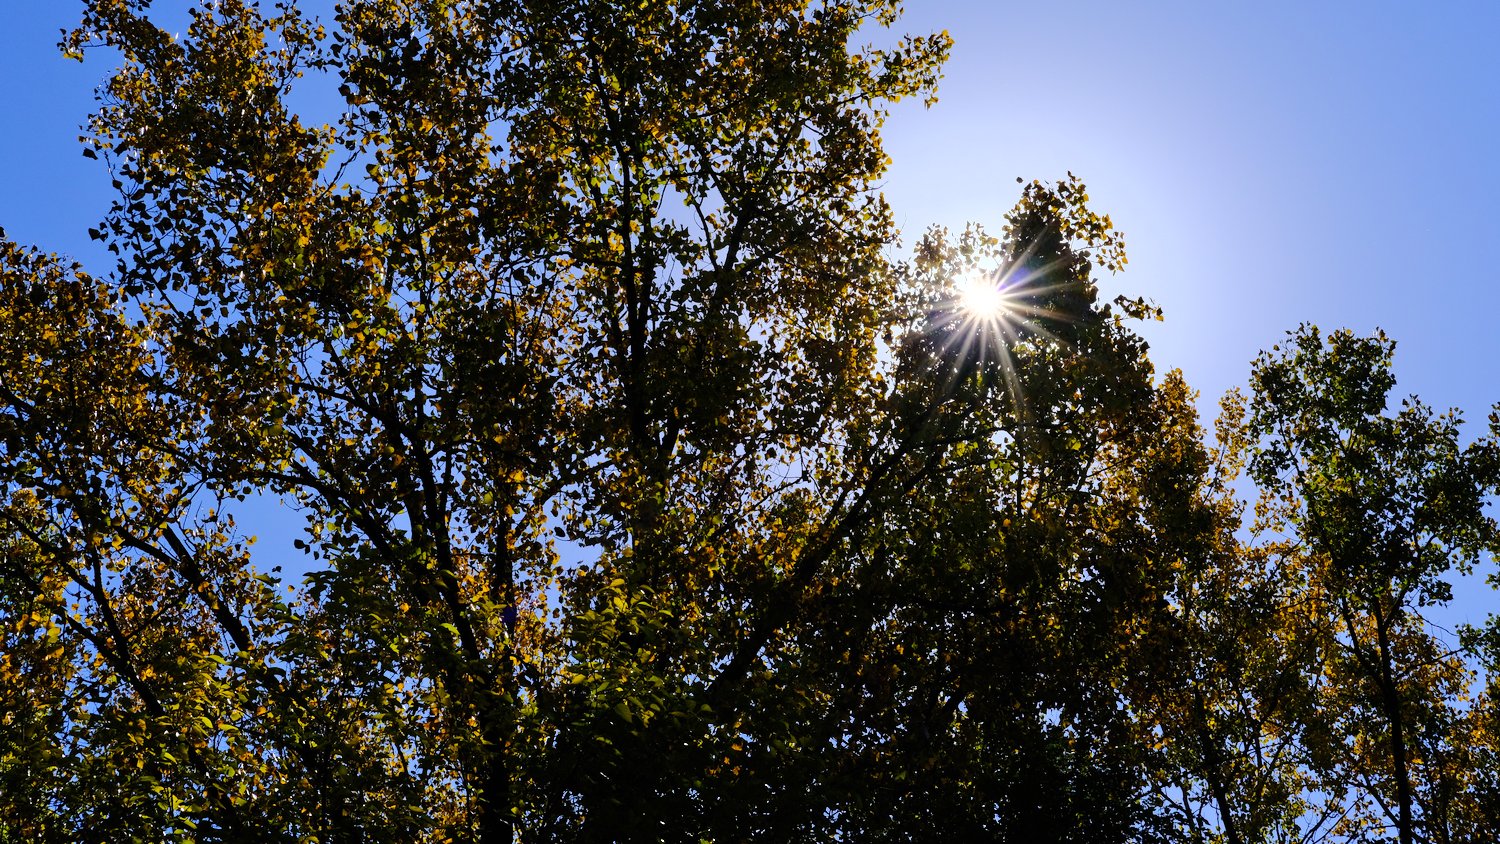 Sun shining through the leaves.